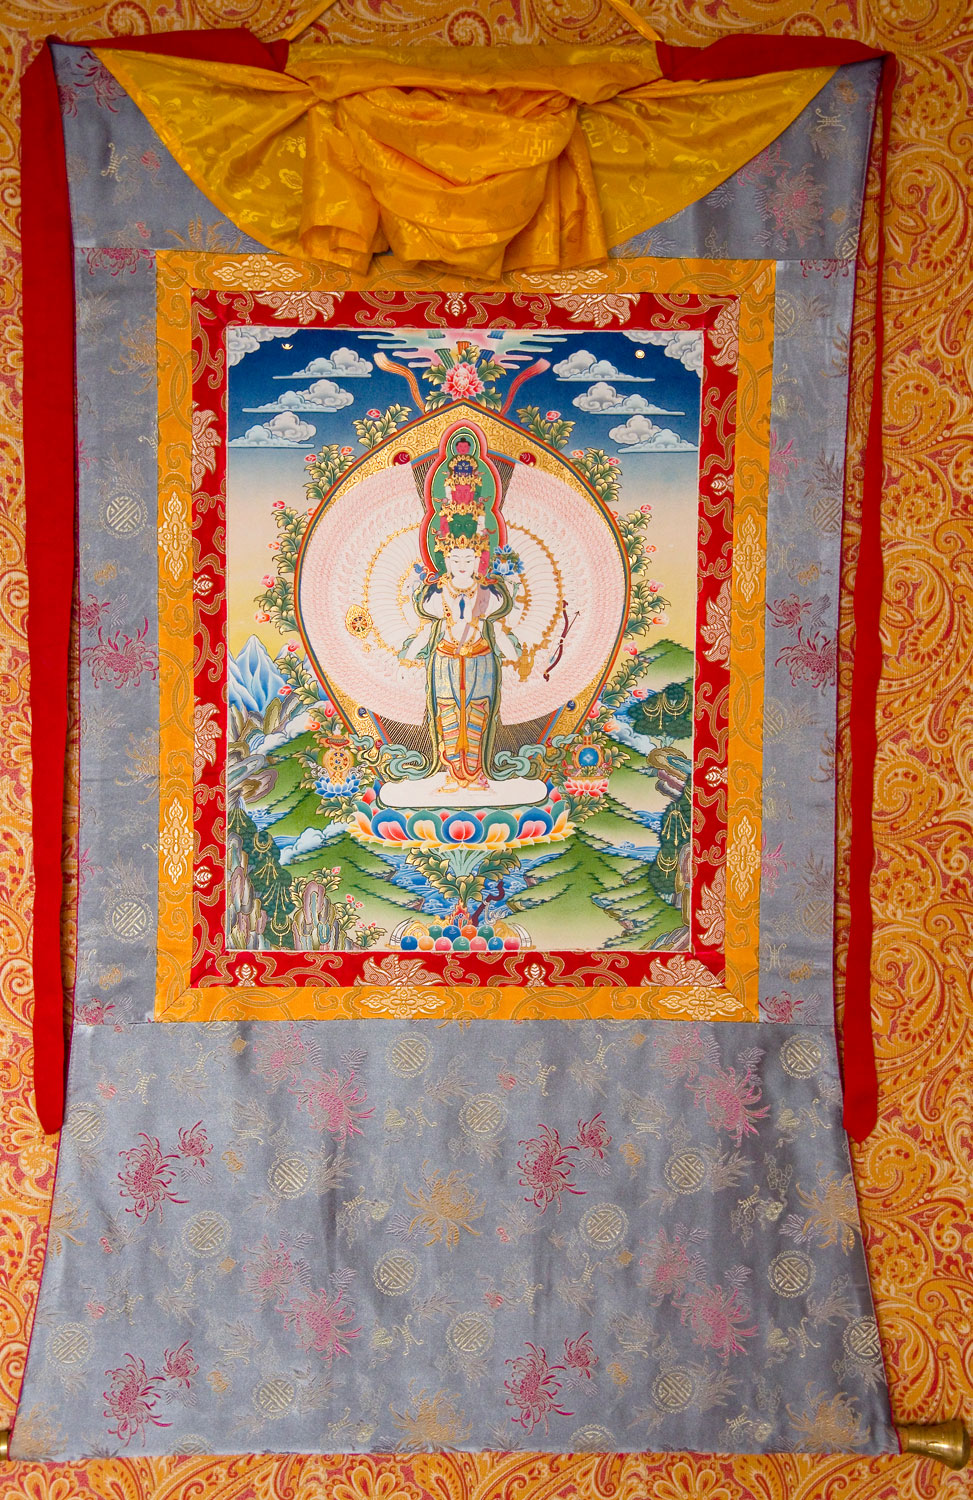 Авалокитешвара Будда сострадания | Тибетская танка (thankas)